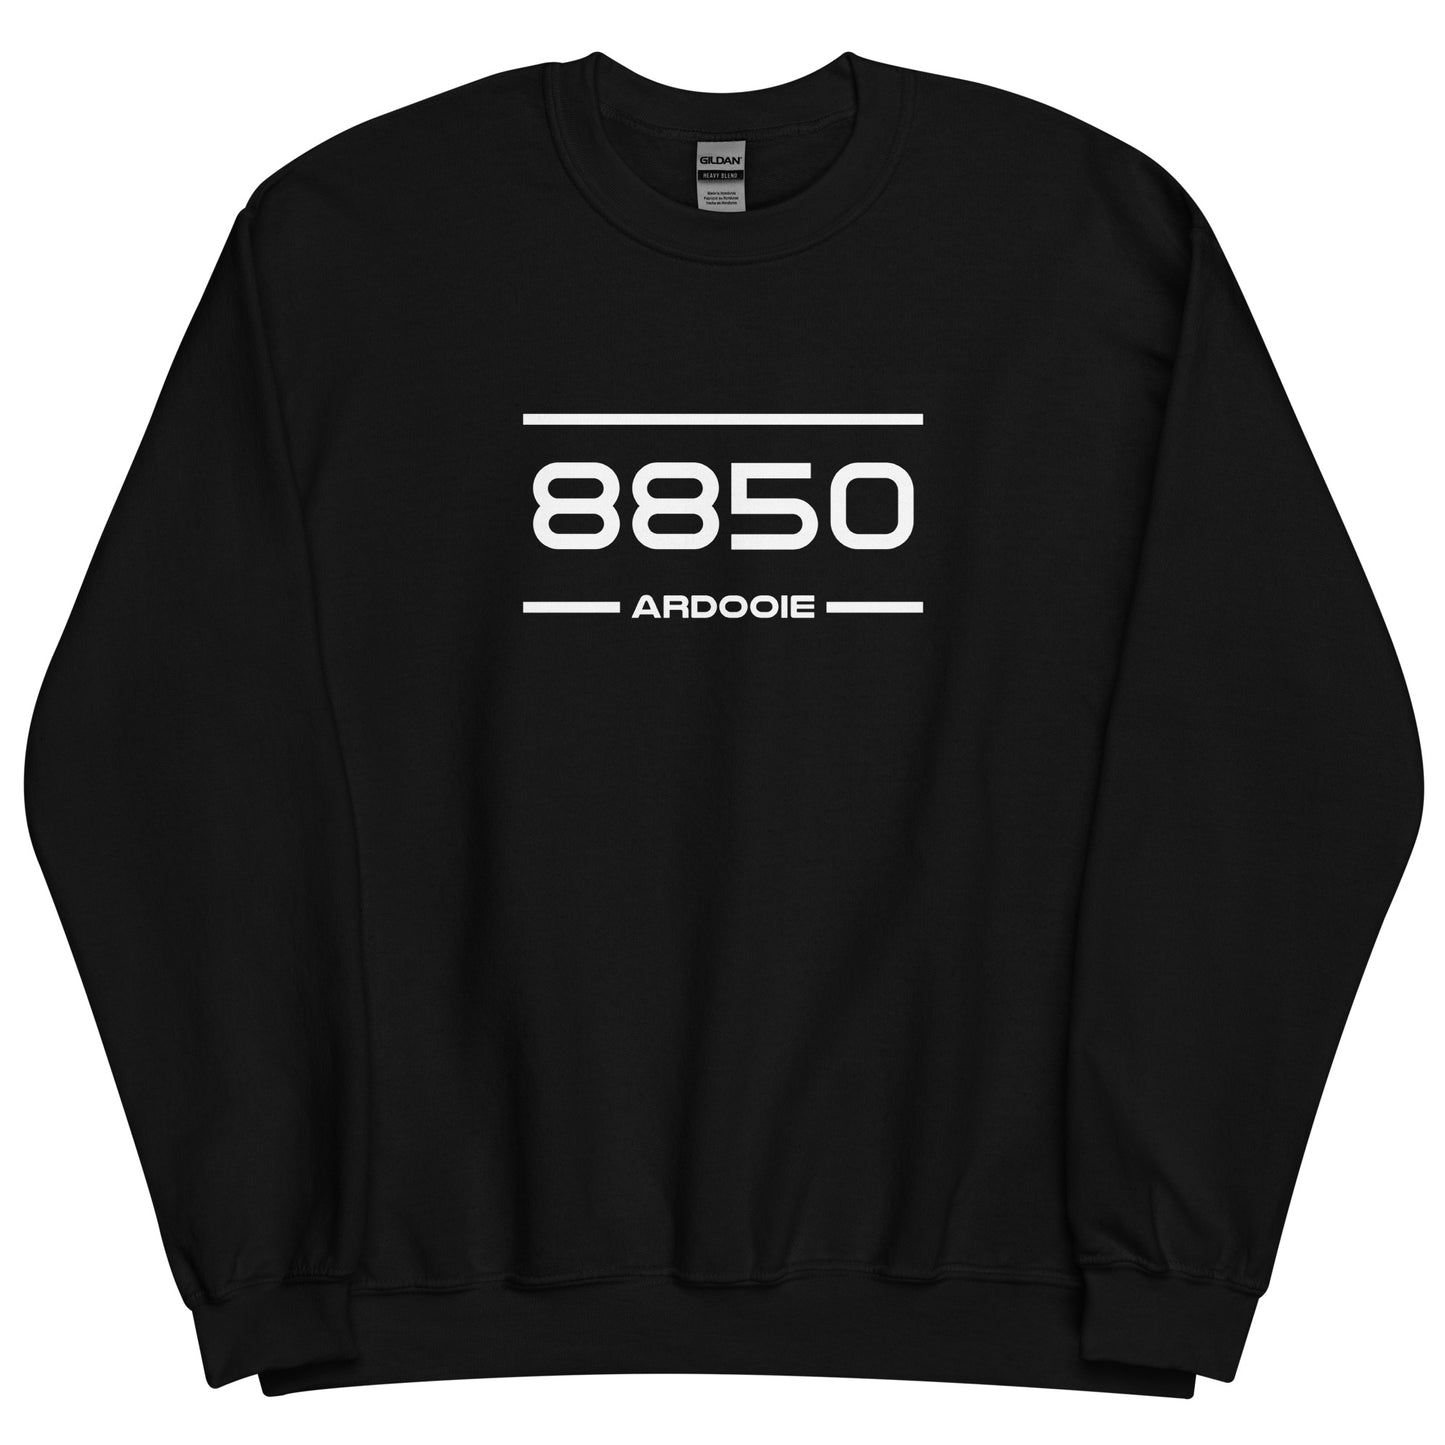 Sweater - 8850 - Ardooie (M/V)